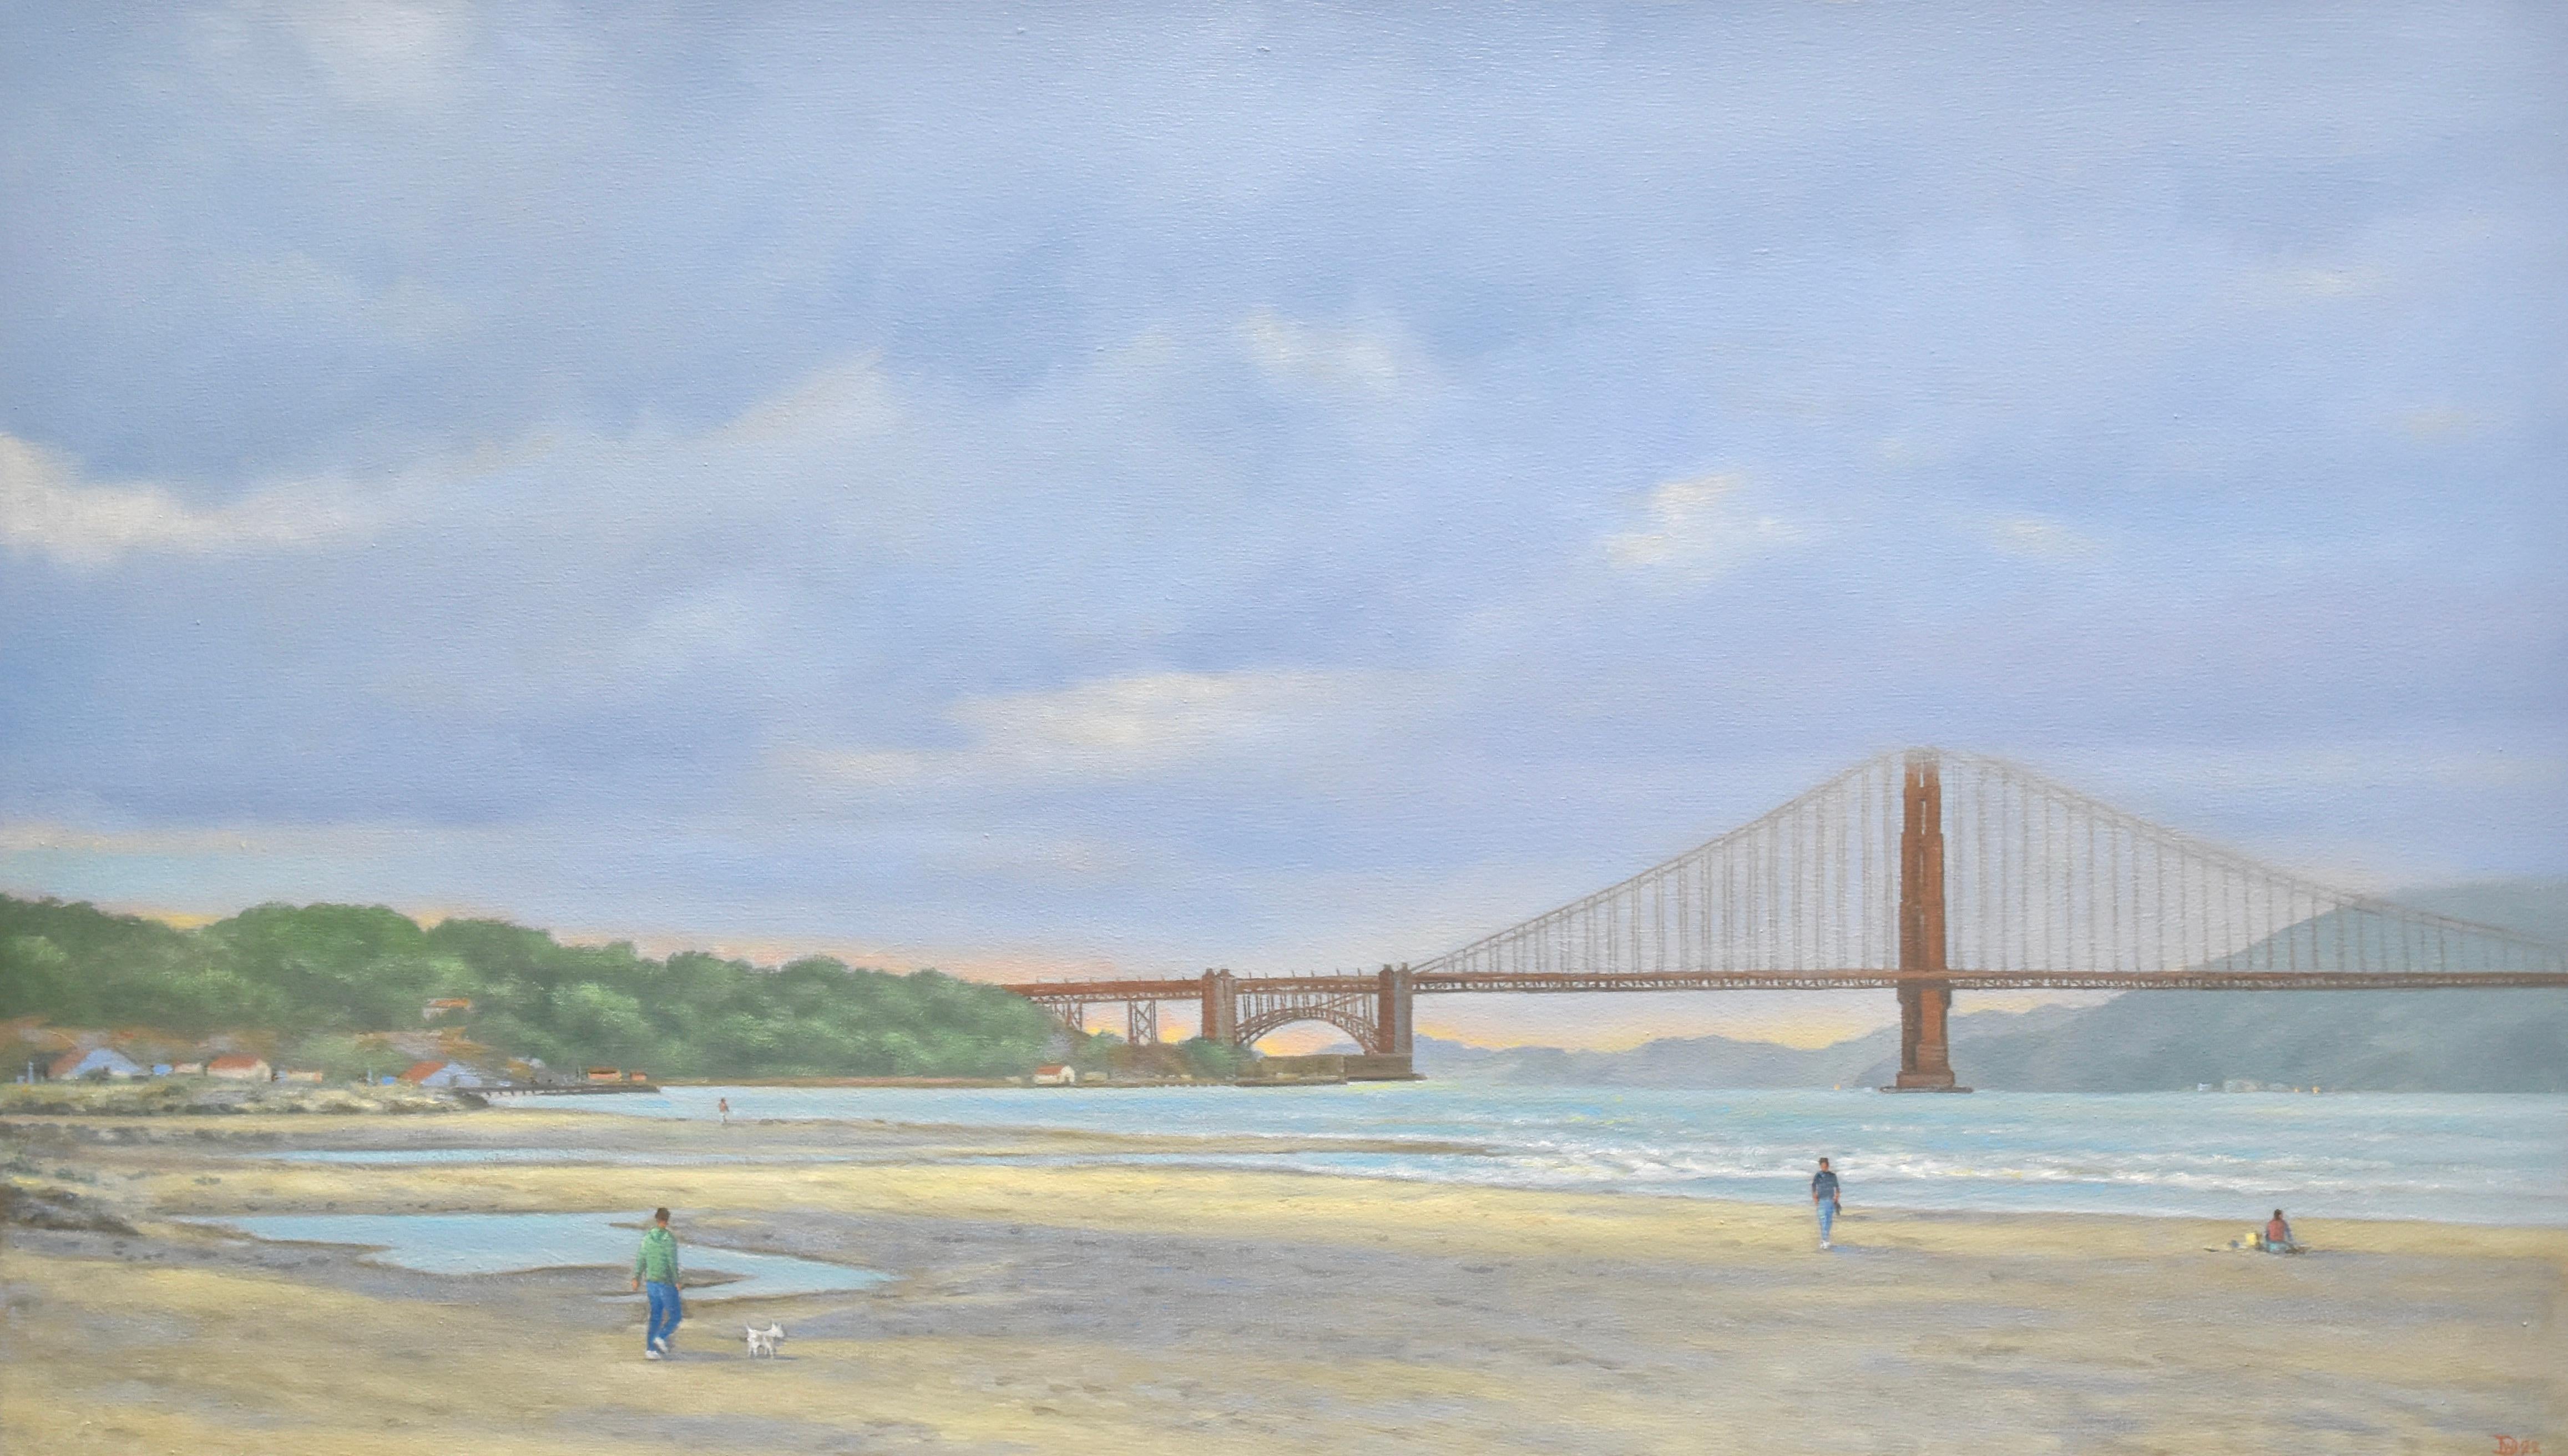 Landscape Painting Willard Dixon - « Beach at Crissy Field » (Le lac de Crissy Field) (San Francisco, Californie)